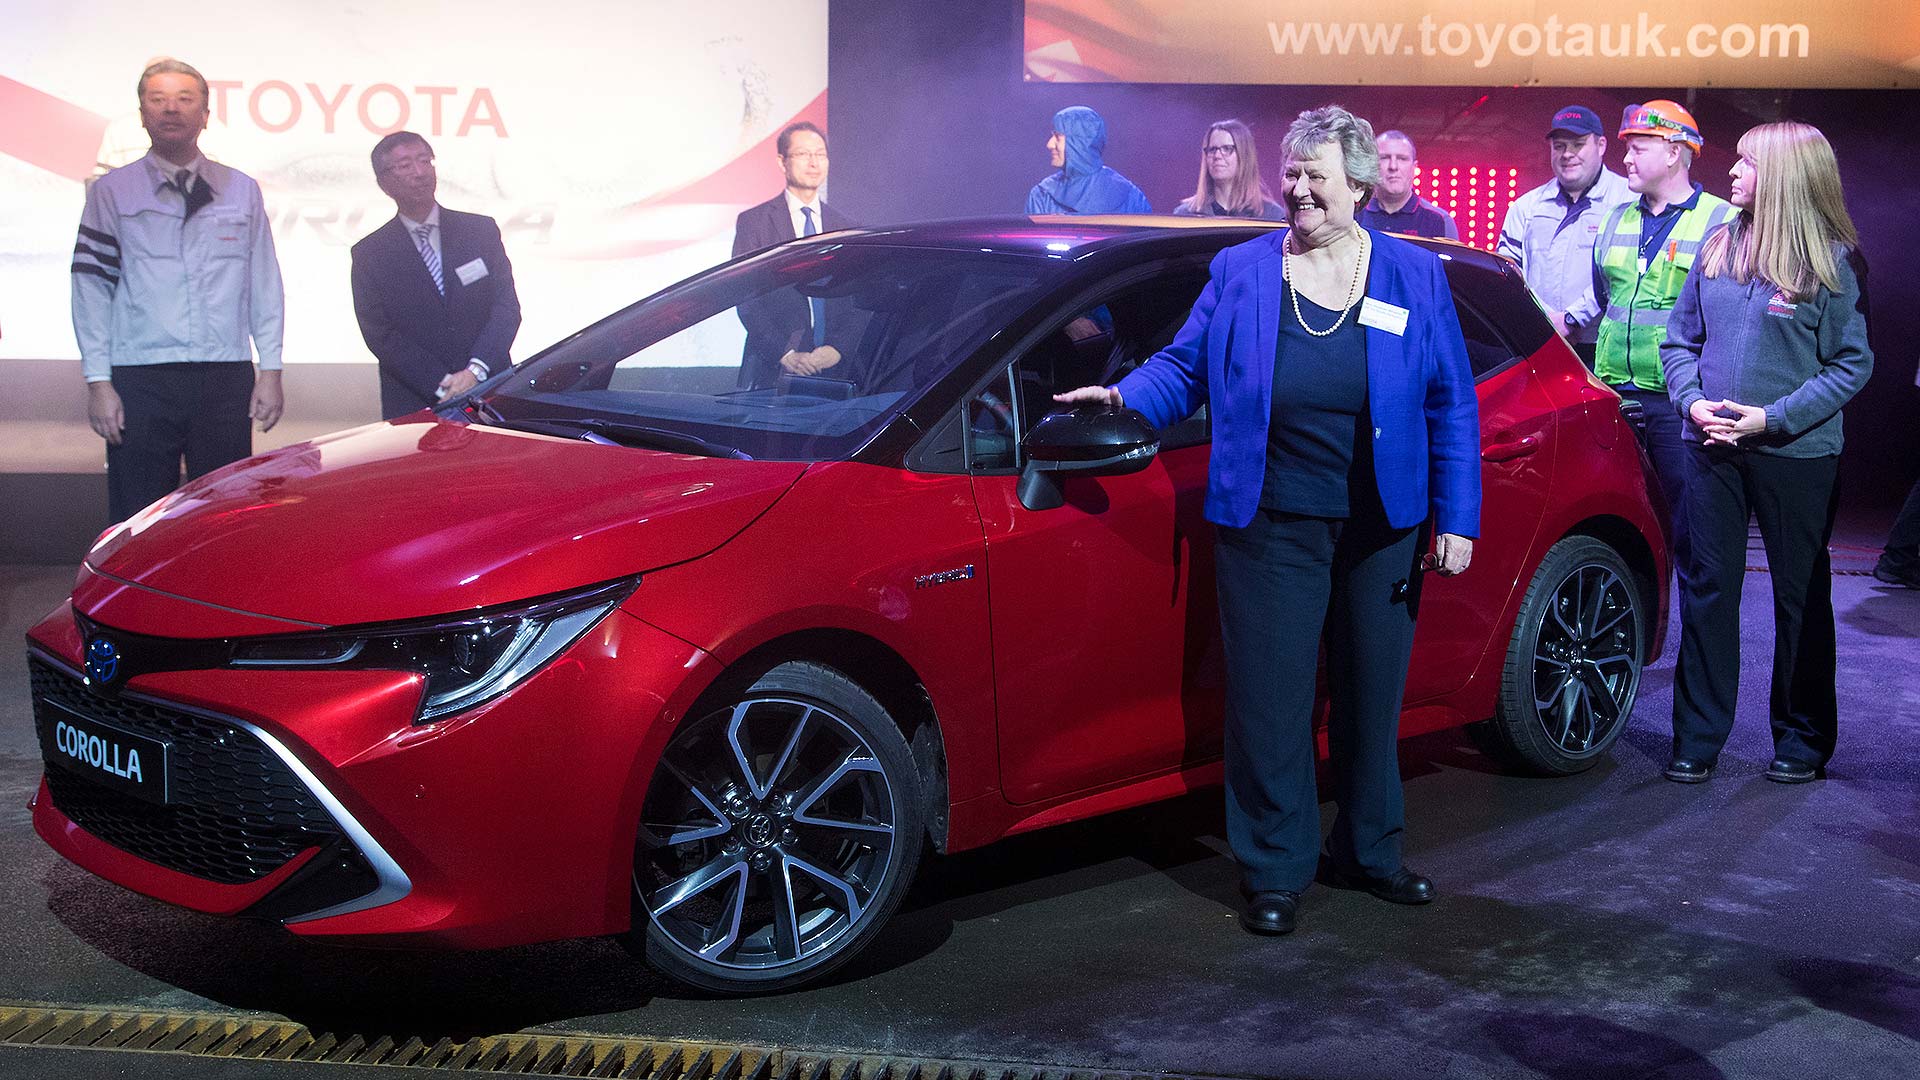 New 2019 Toyota Corolla start of production ceremony